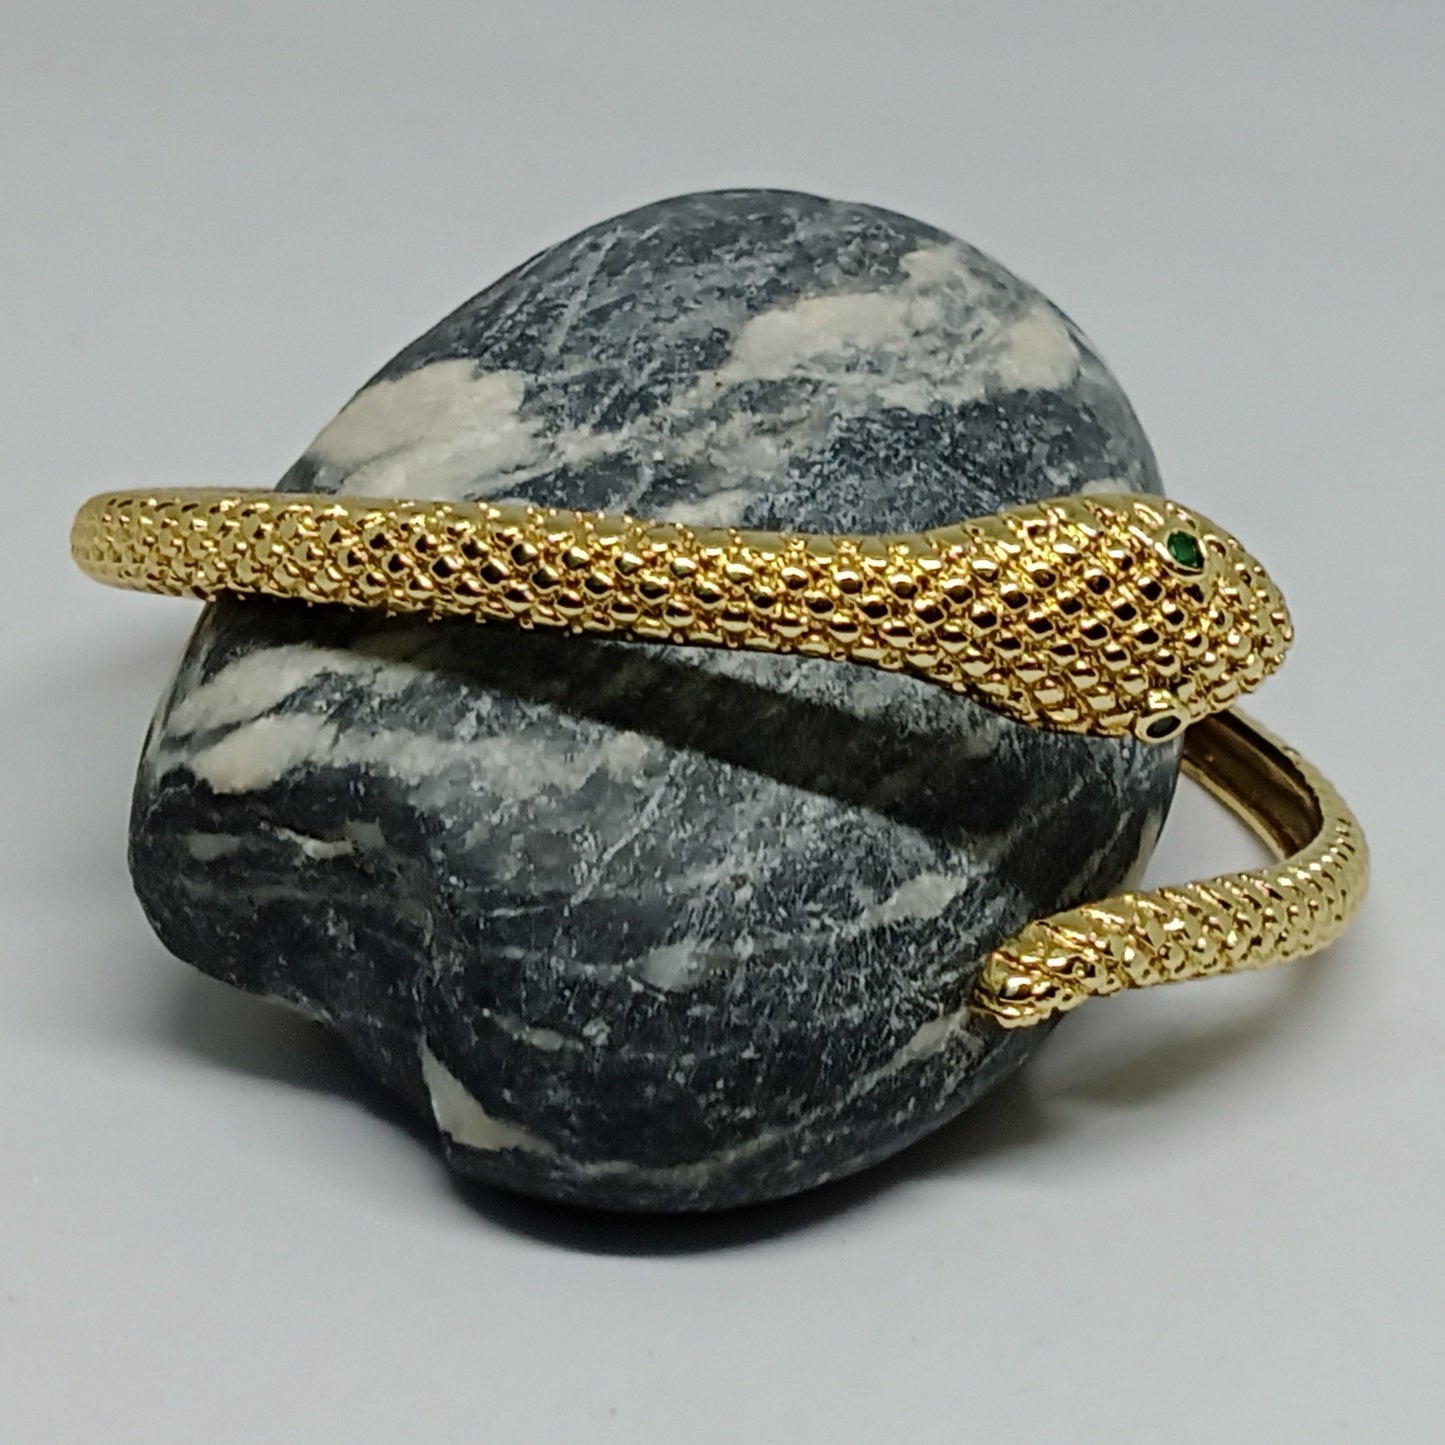 Fine Gold Serpent Bracelet